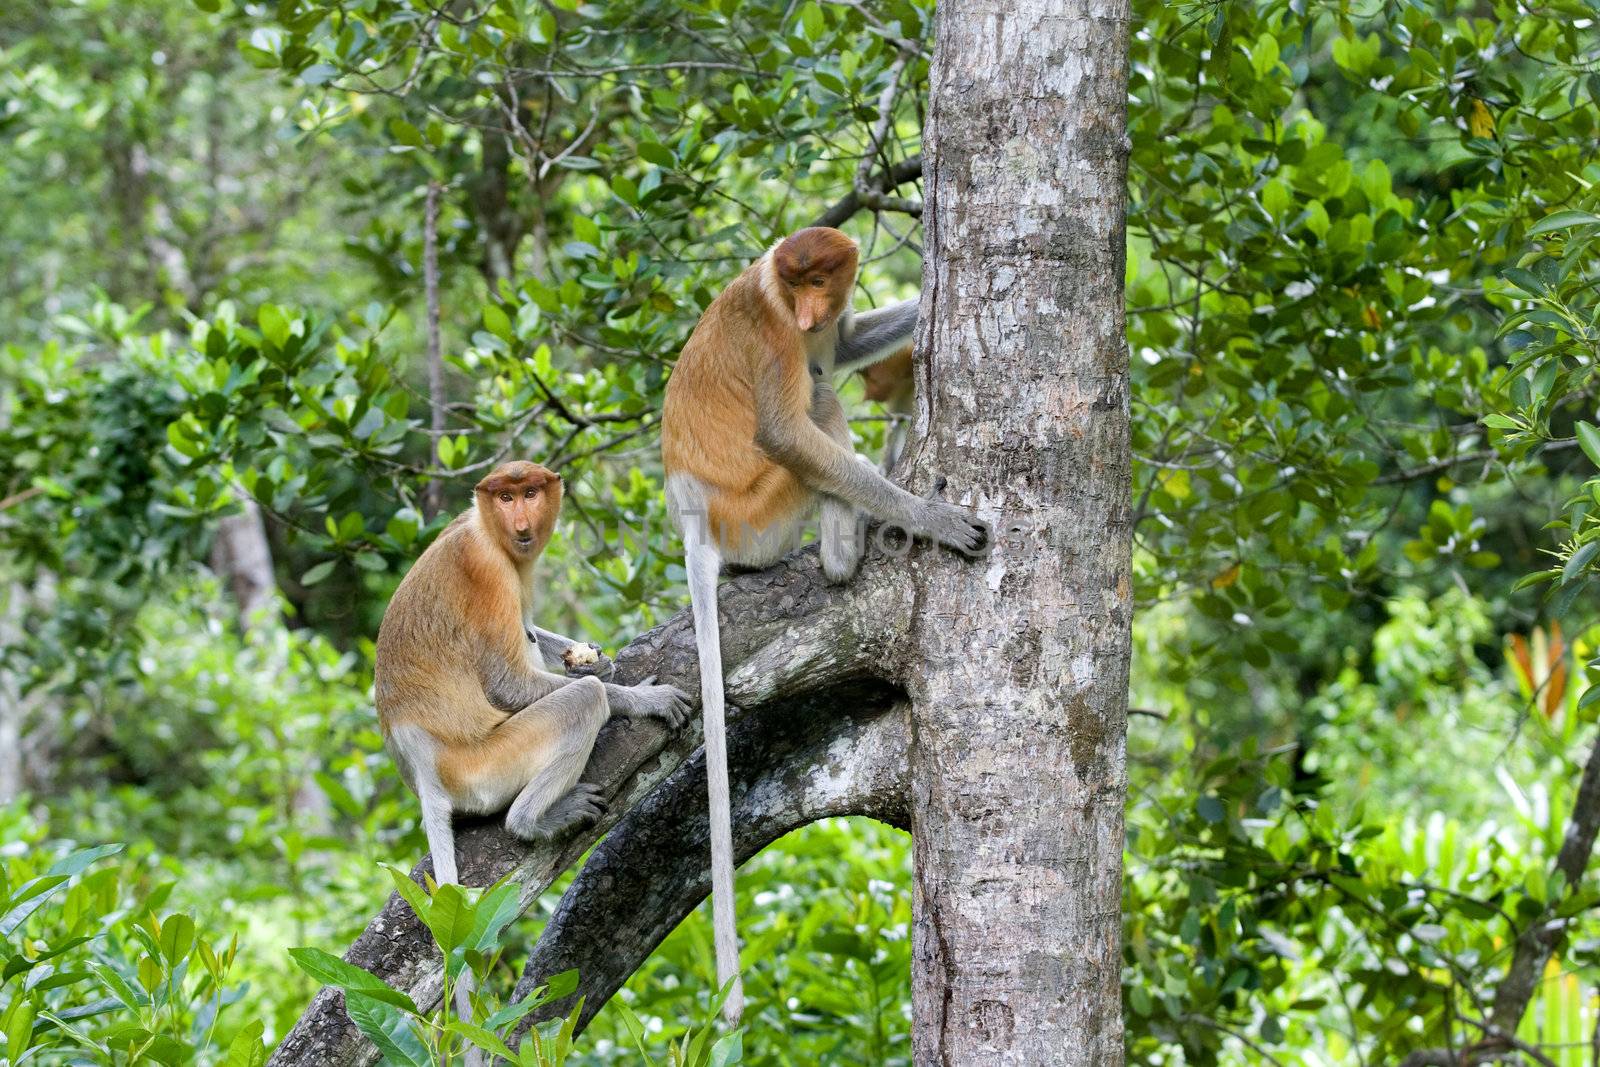 Proboscis monkeys by kjorgen